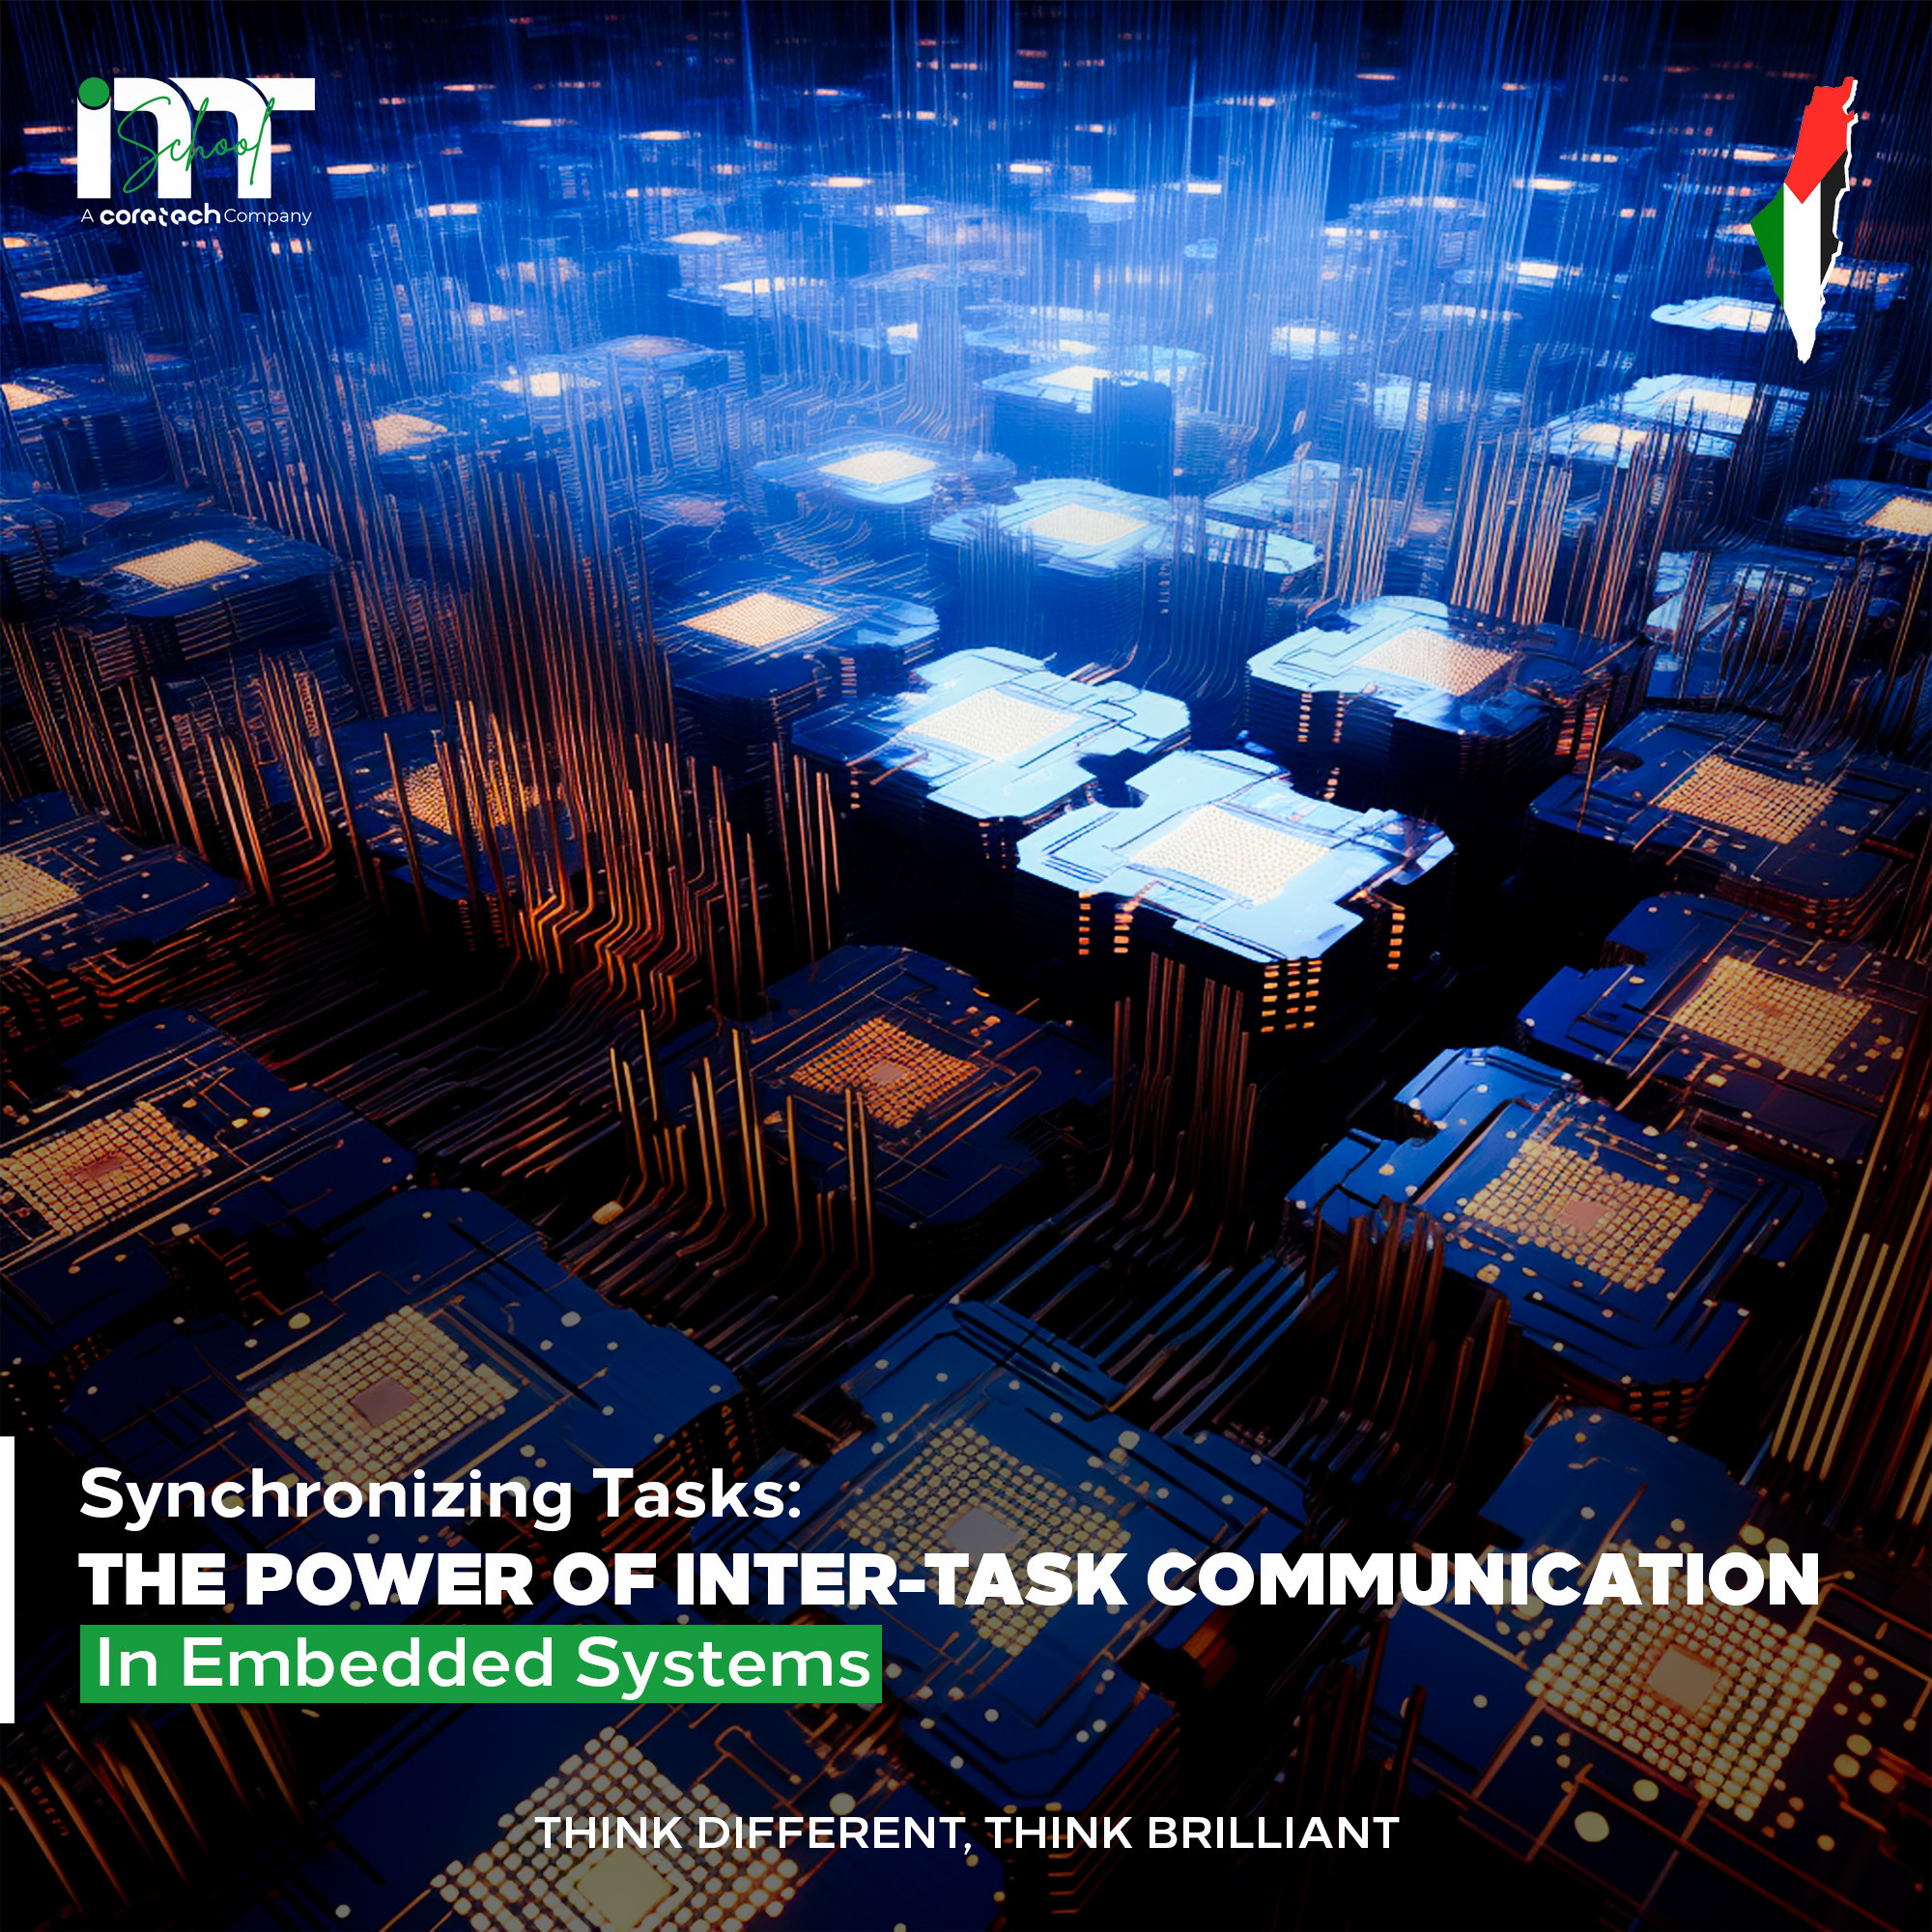 Inter-Task Communication (ITC)